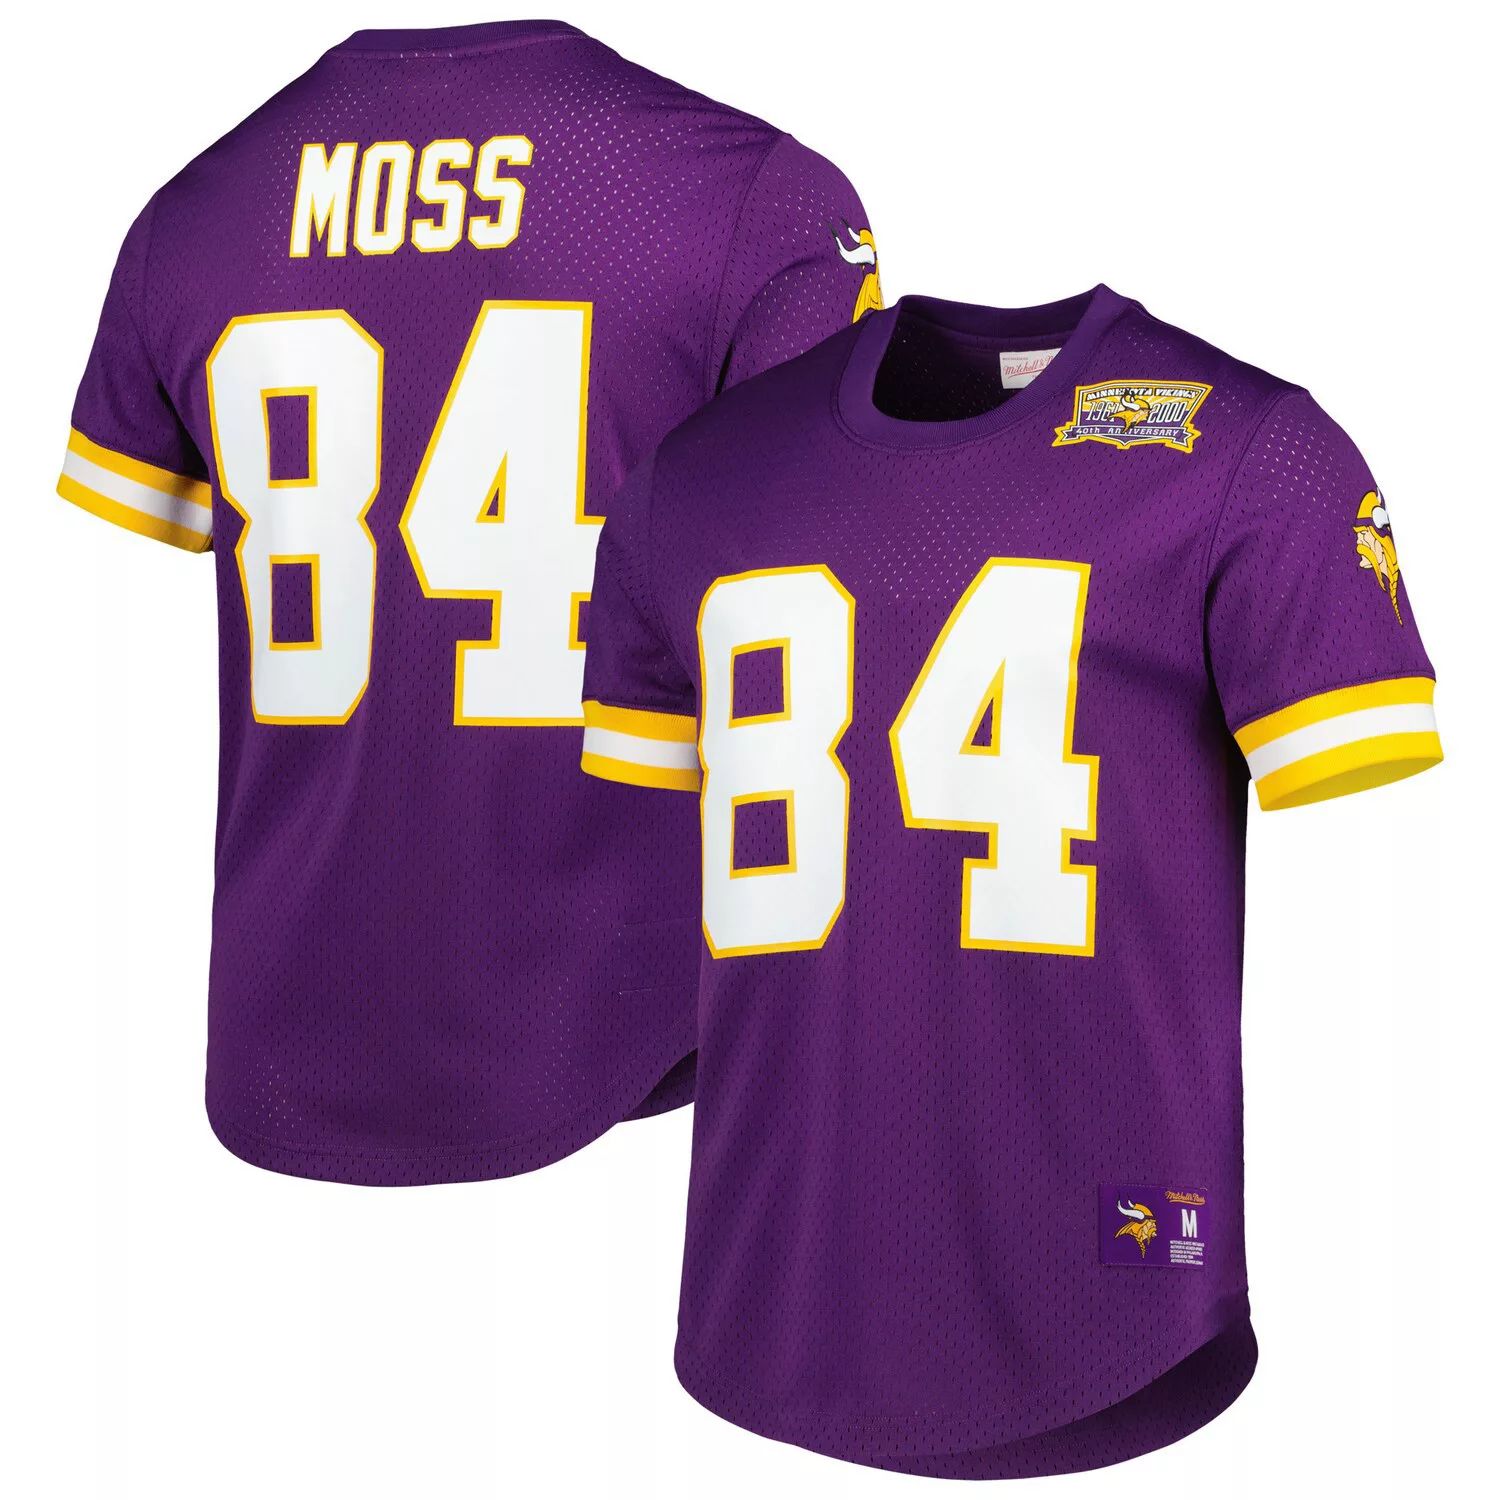 Мужская футболка Mitchell & Ness Randy Moss Purple Minnesota Vikings с именем и номером игрока в отставке